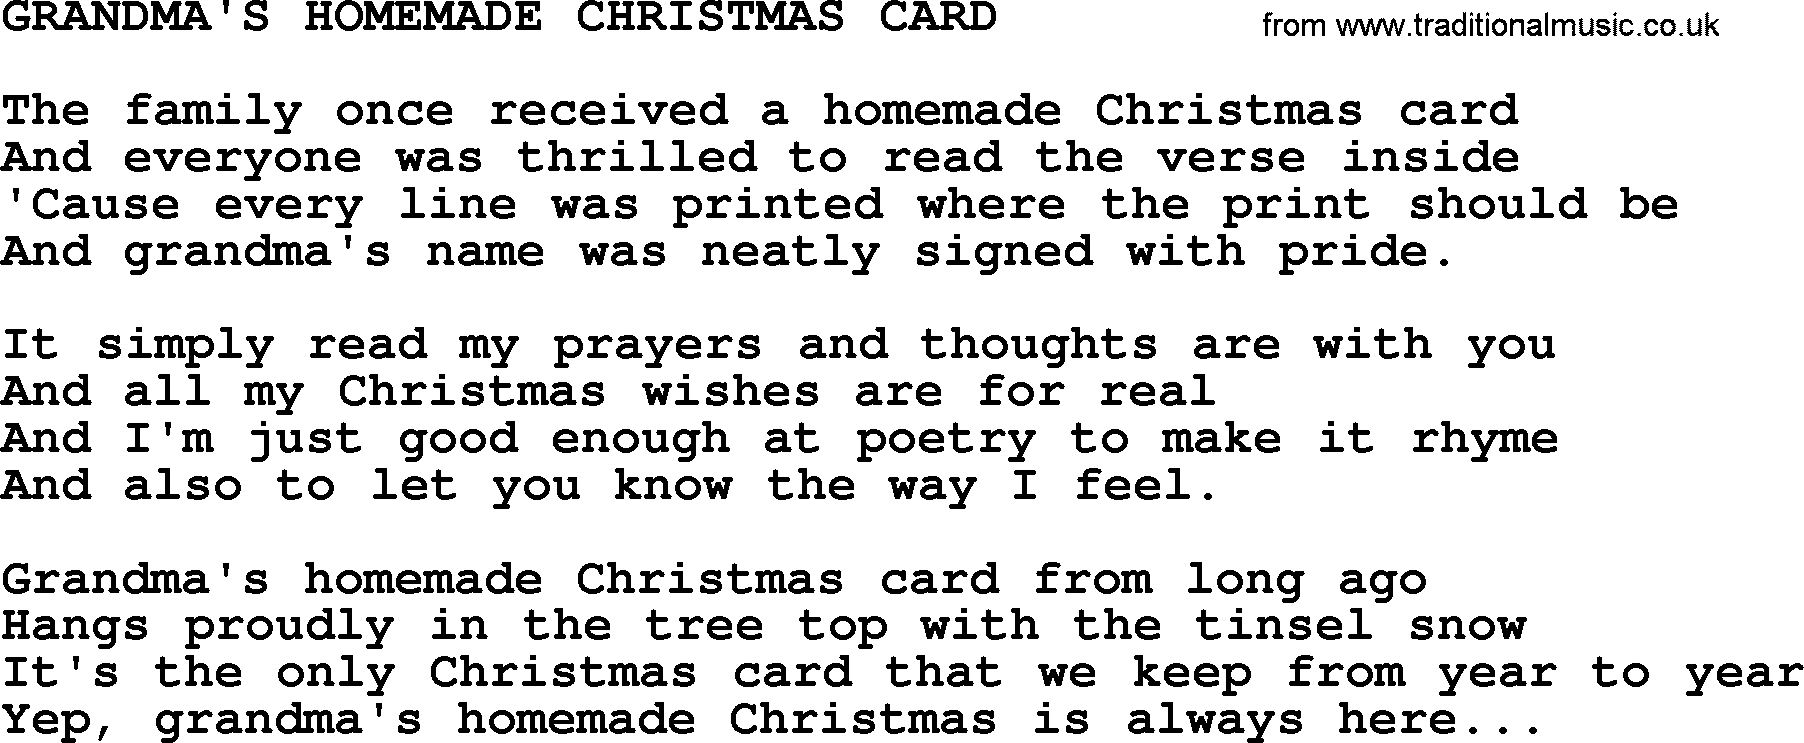 Merle Haggard song: Grandma's Homemade Christmas Card, lyrics.